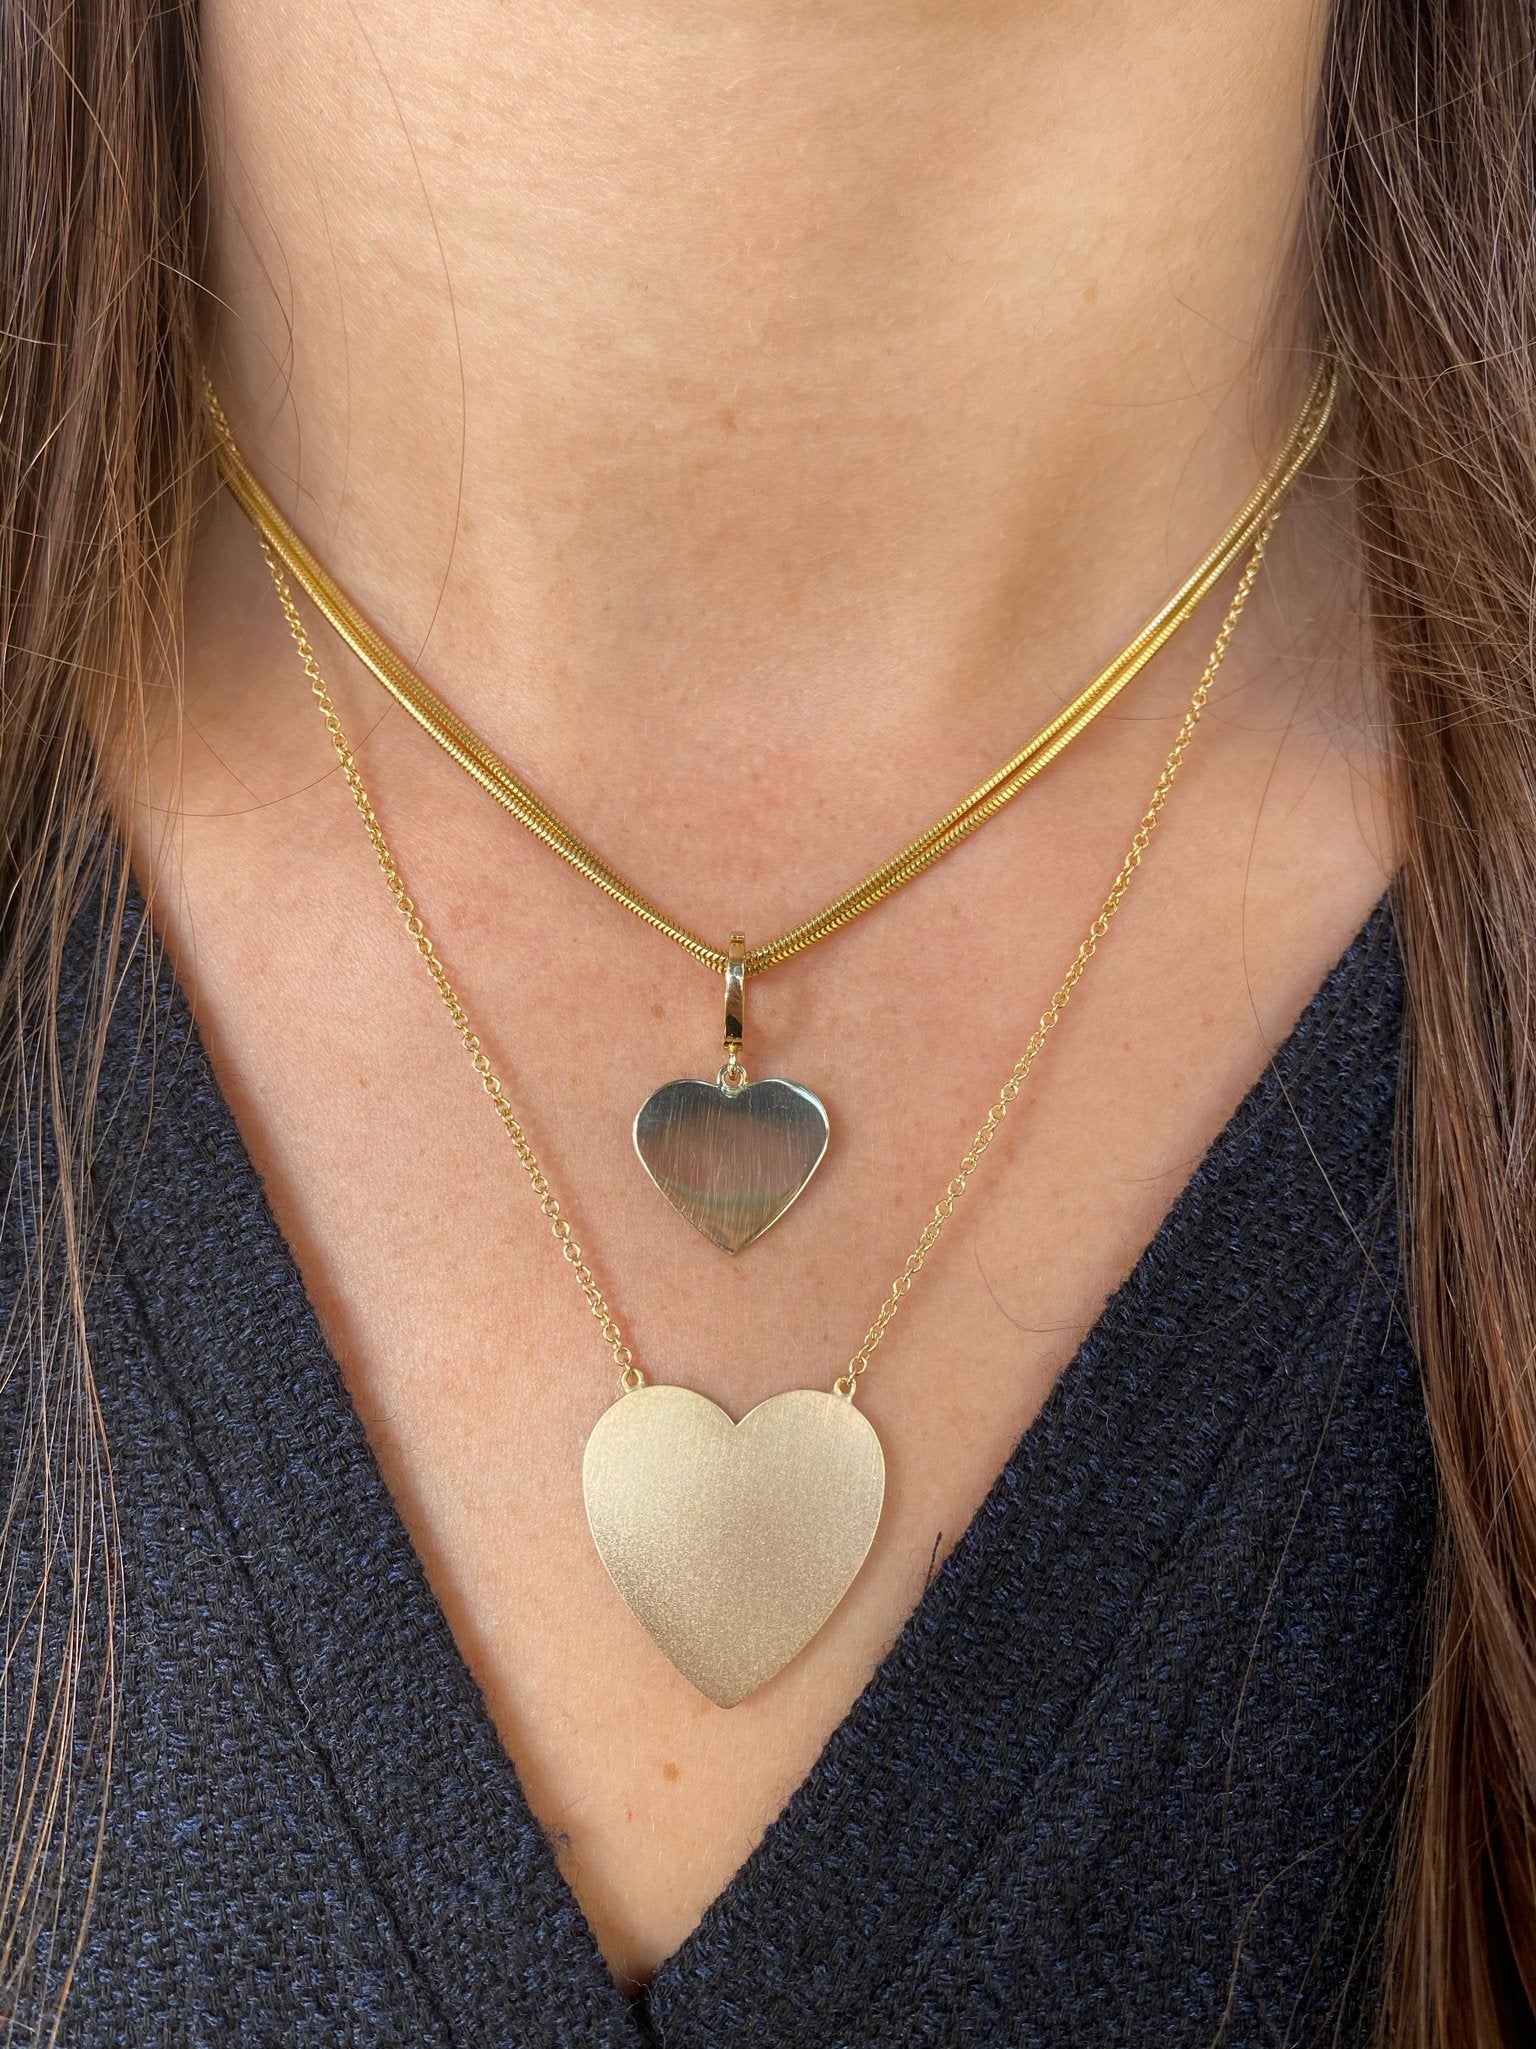 shermer academy Heart necklace - アクセサリー